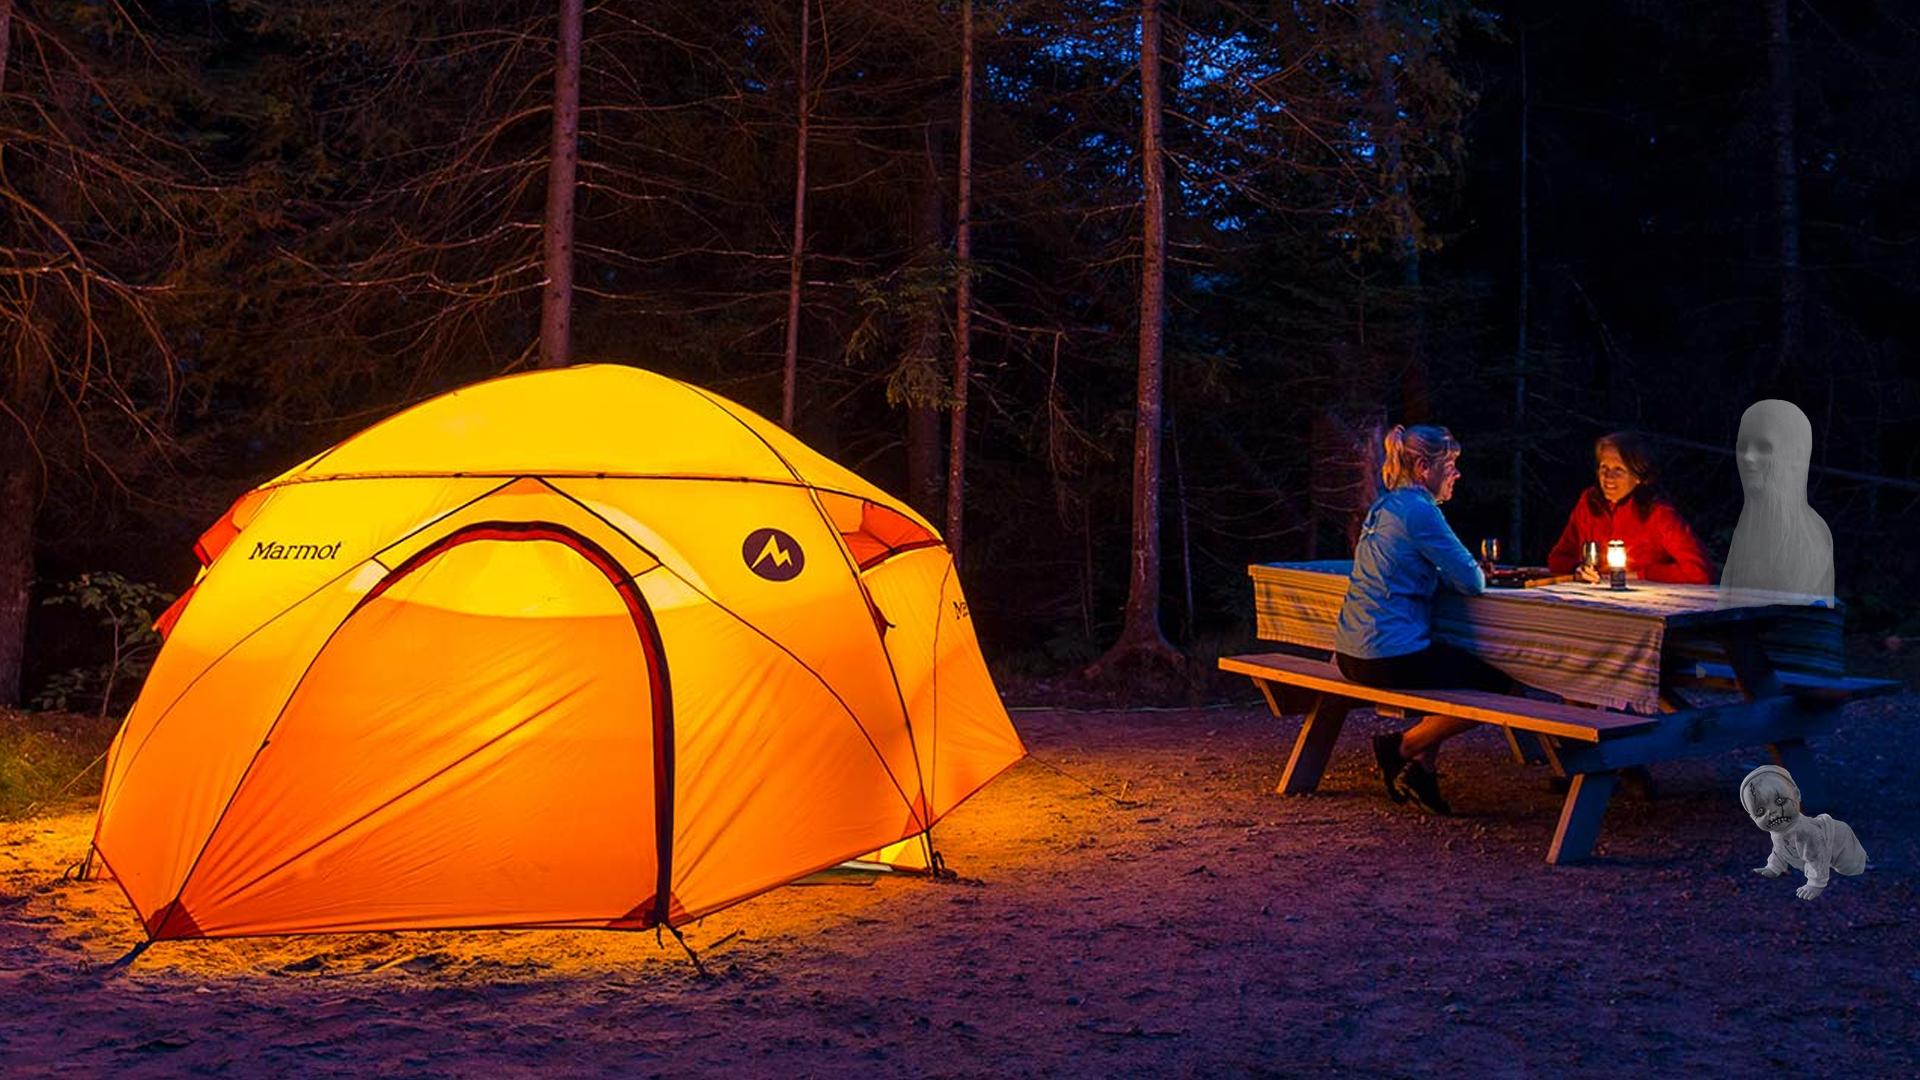 When we go camping. Палатка Camping Tent. Палатка kailas Holiday 4 Camping Tent Inca Yellow. Туризм с палатками. Поход с палатками.